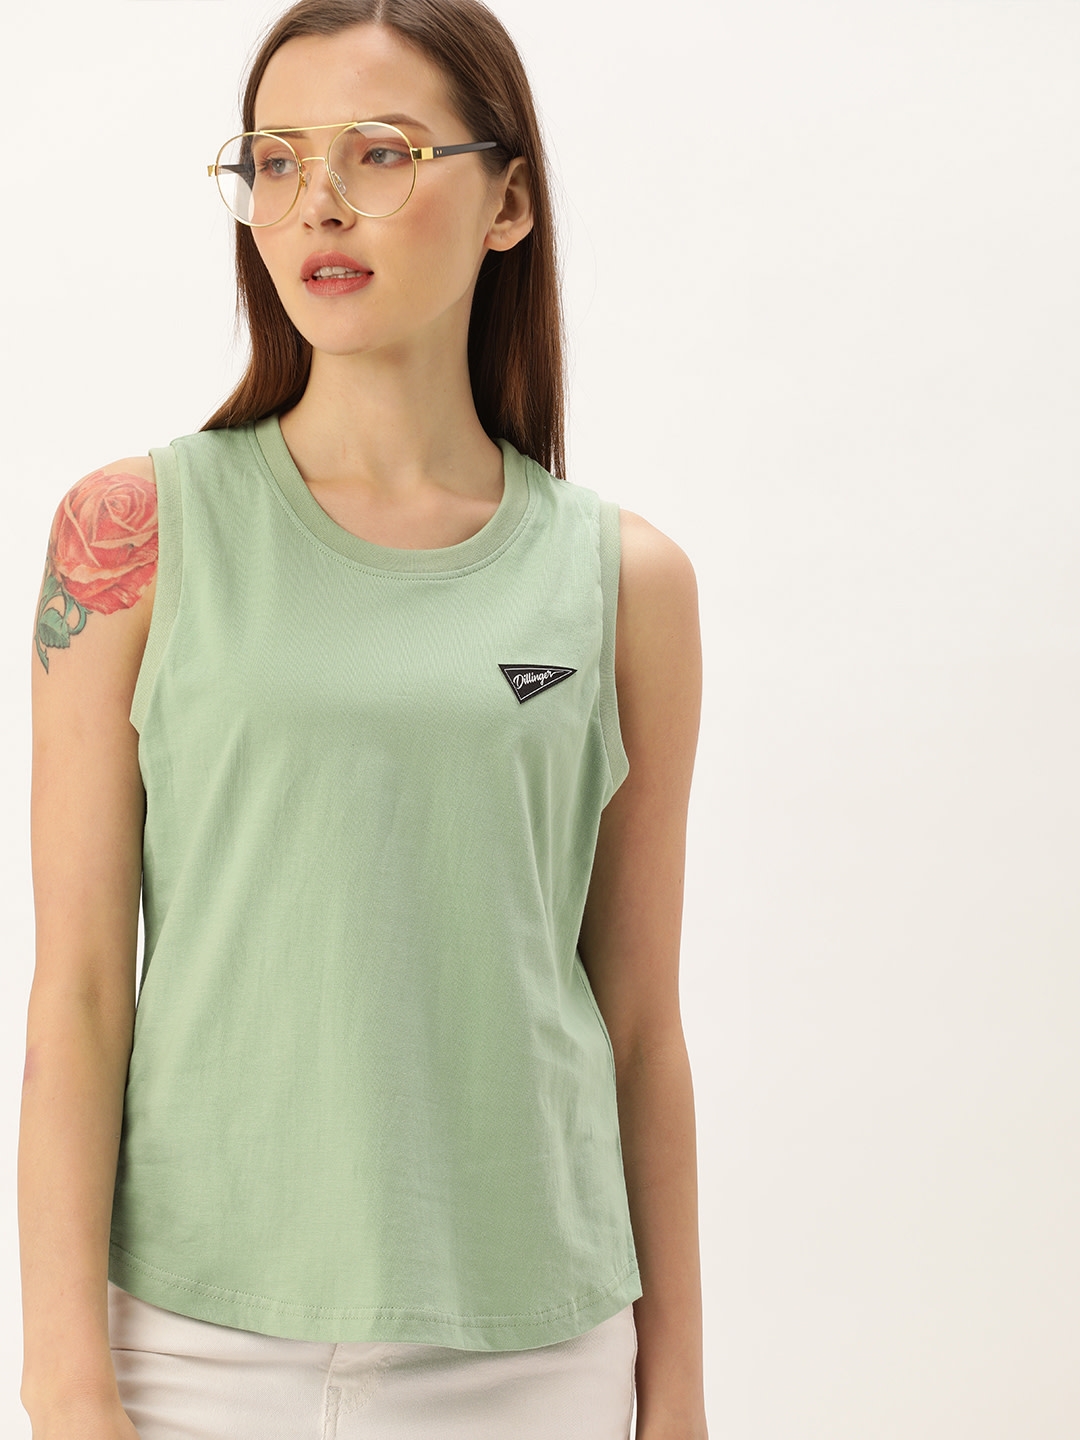 Dillinger | Dillinger Green Solid Tank Top T-Shirt